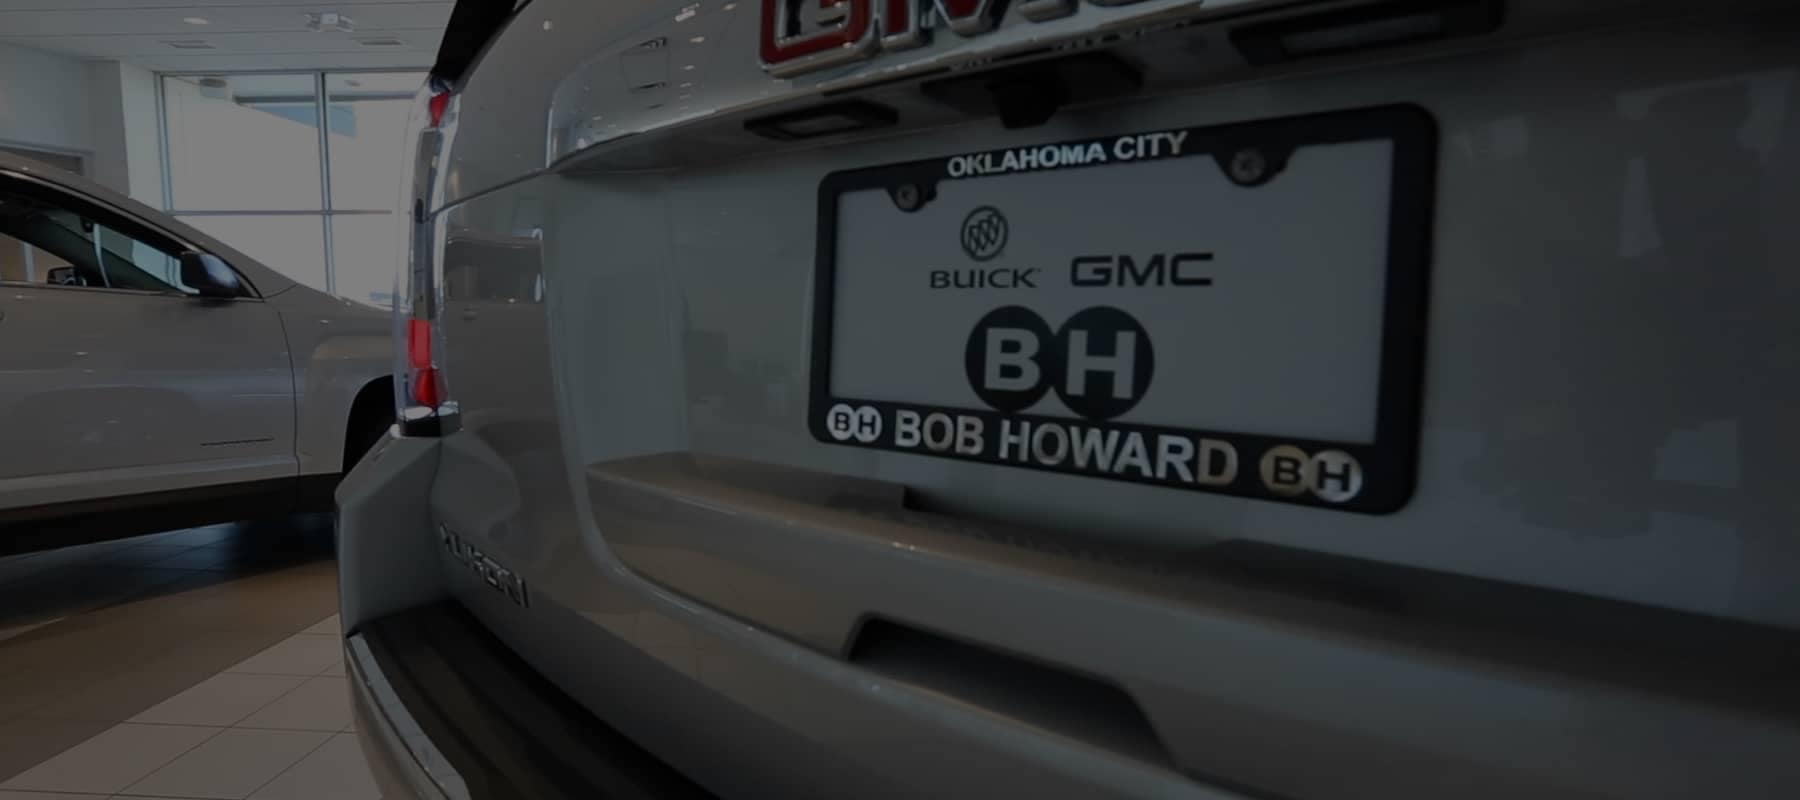 Bob Howard Buick GMC Dealership Interior License Plate